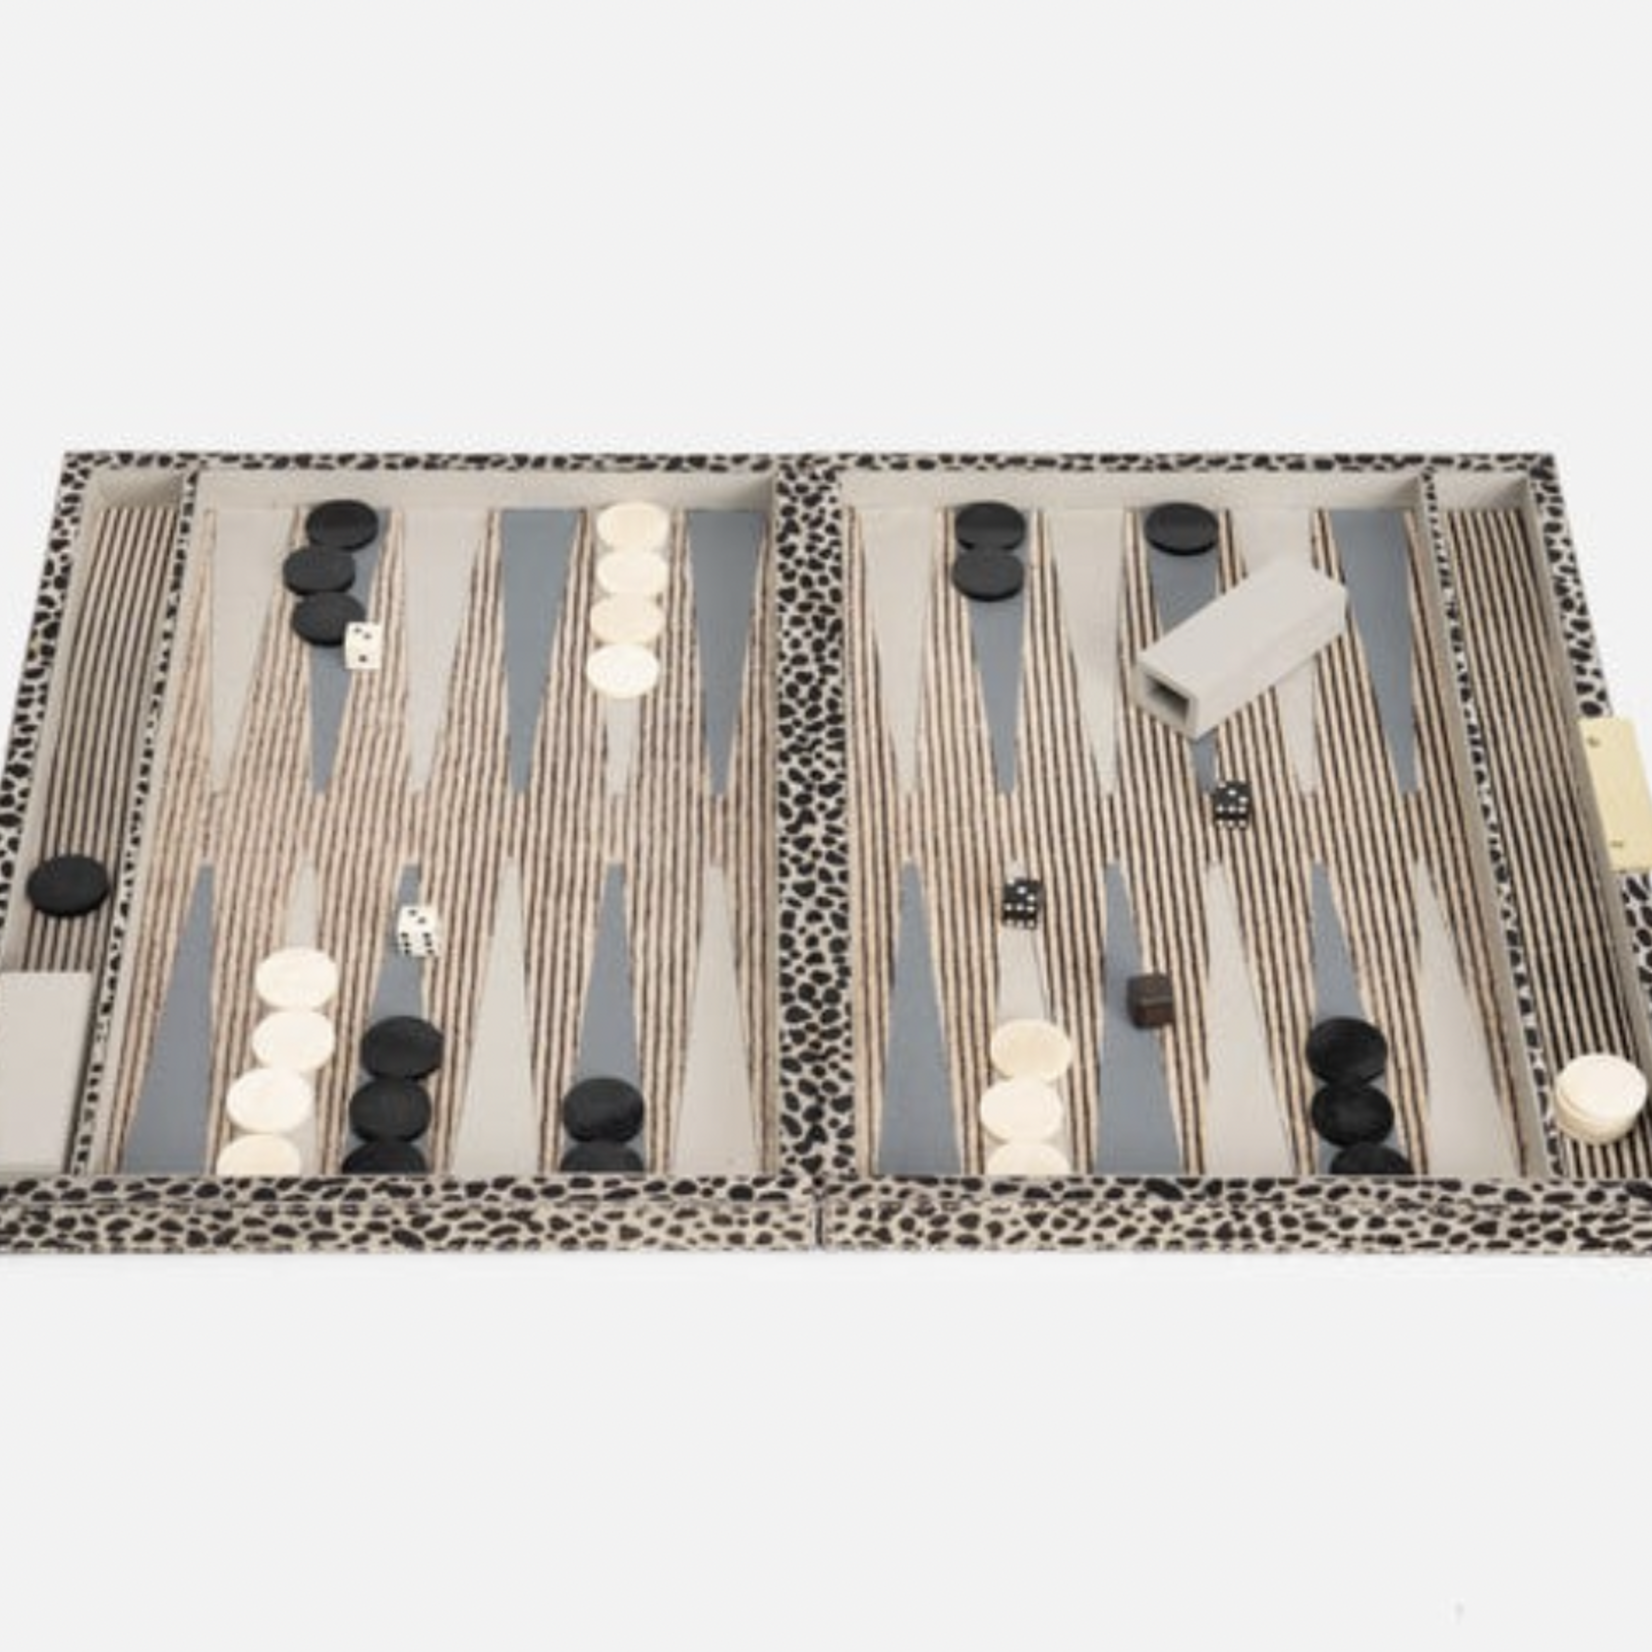 Bailey Backgammon Set, Cheetah Print, Large